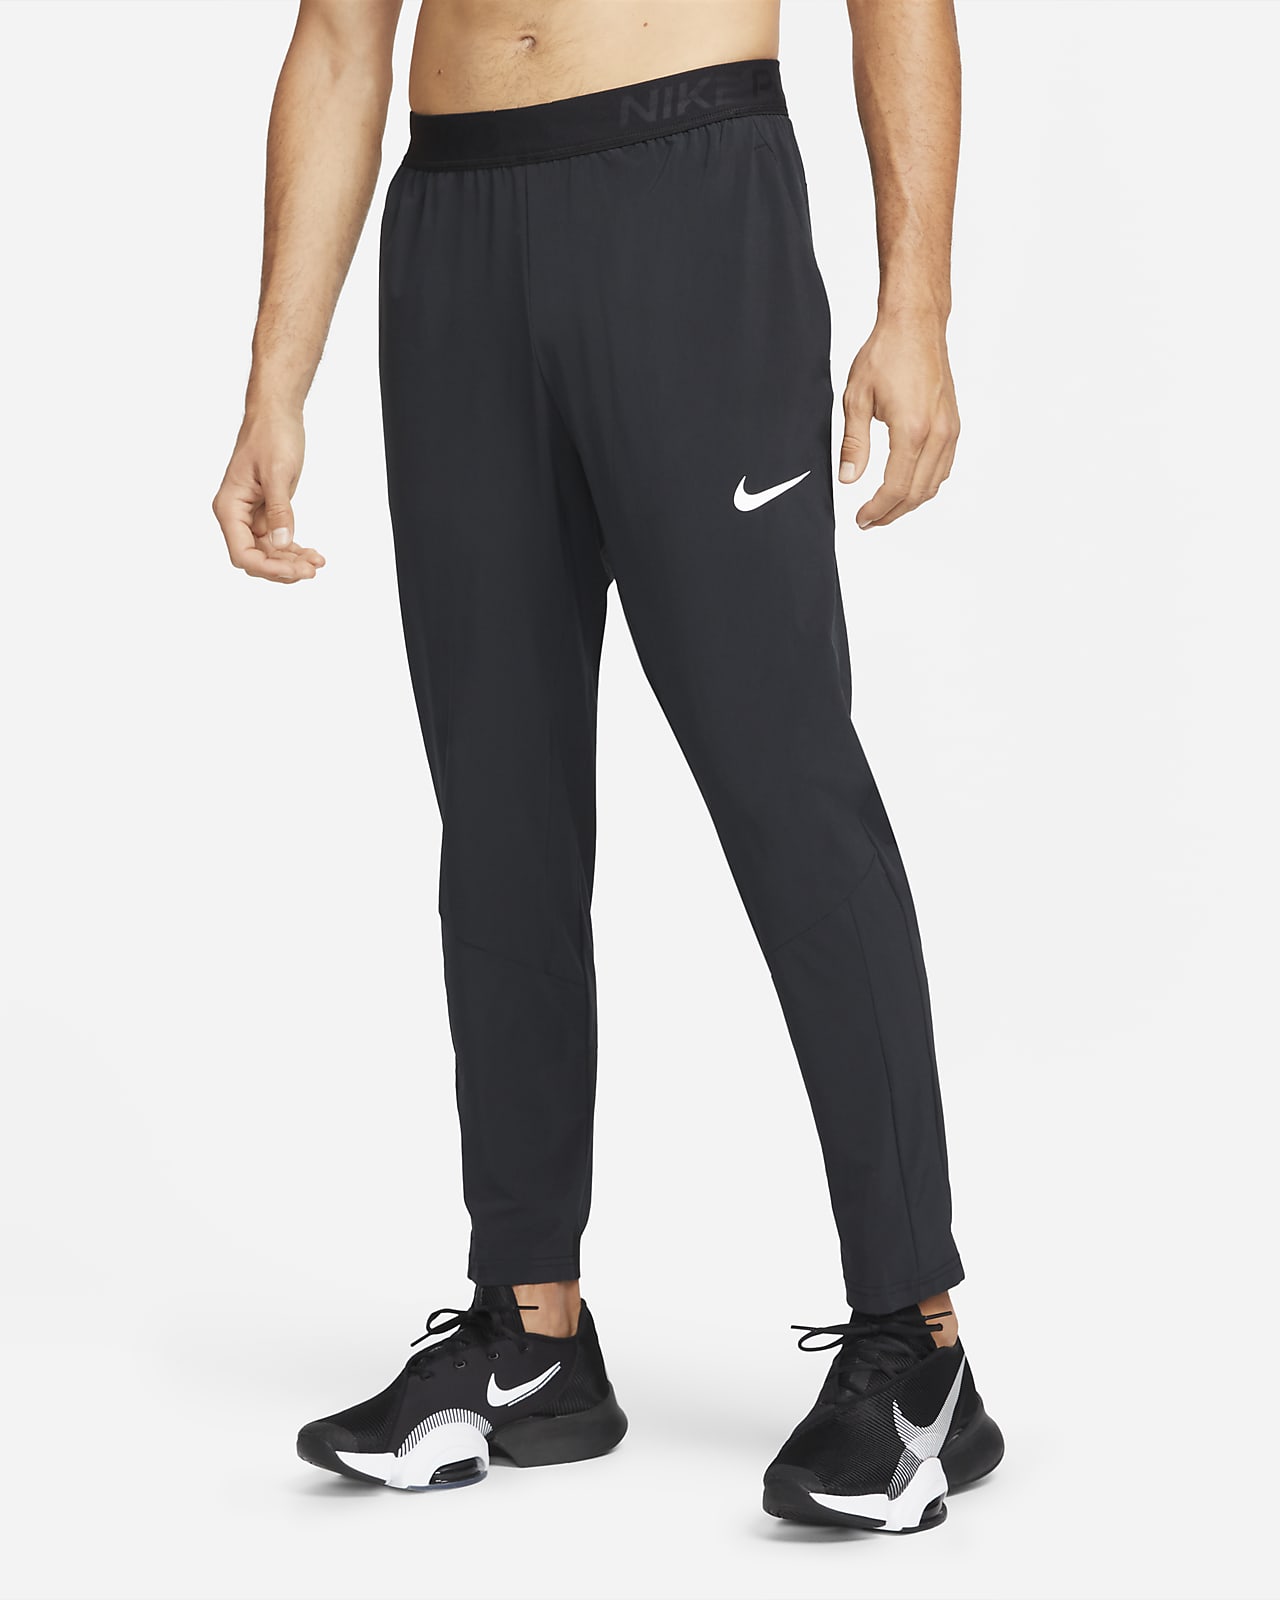 Nike Dri-FIT Phenom Elite Running Pants Trousers, Men's Fashion, Activewear  on Carousell